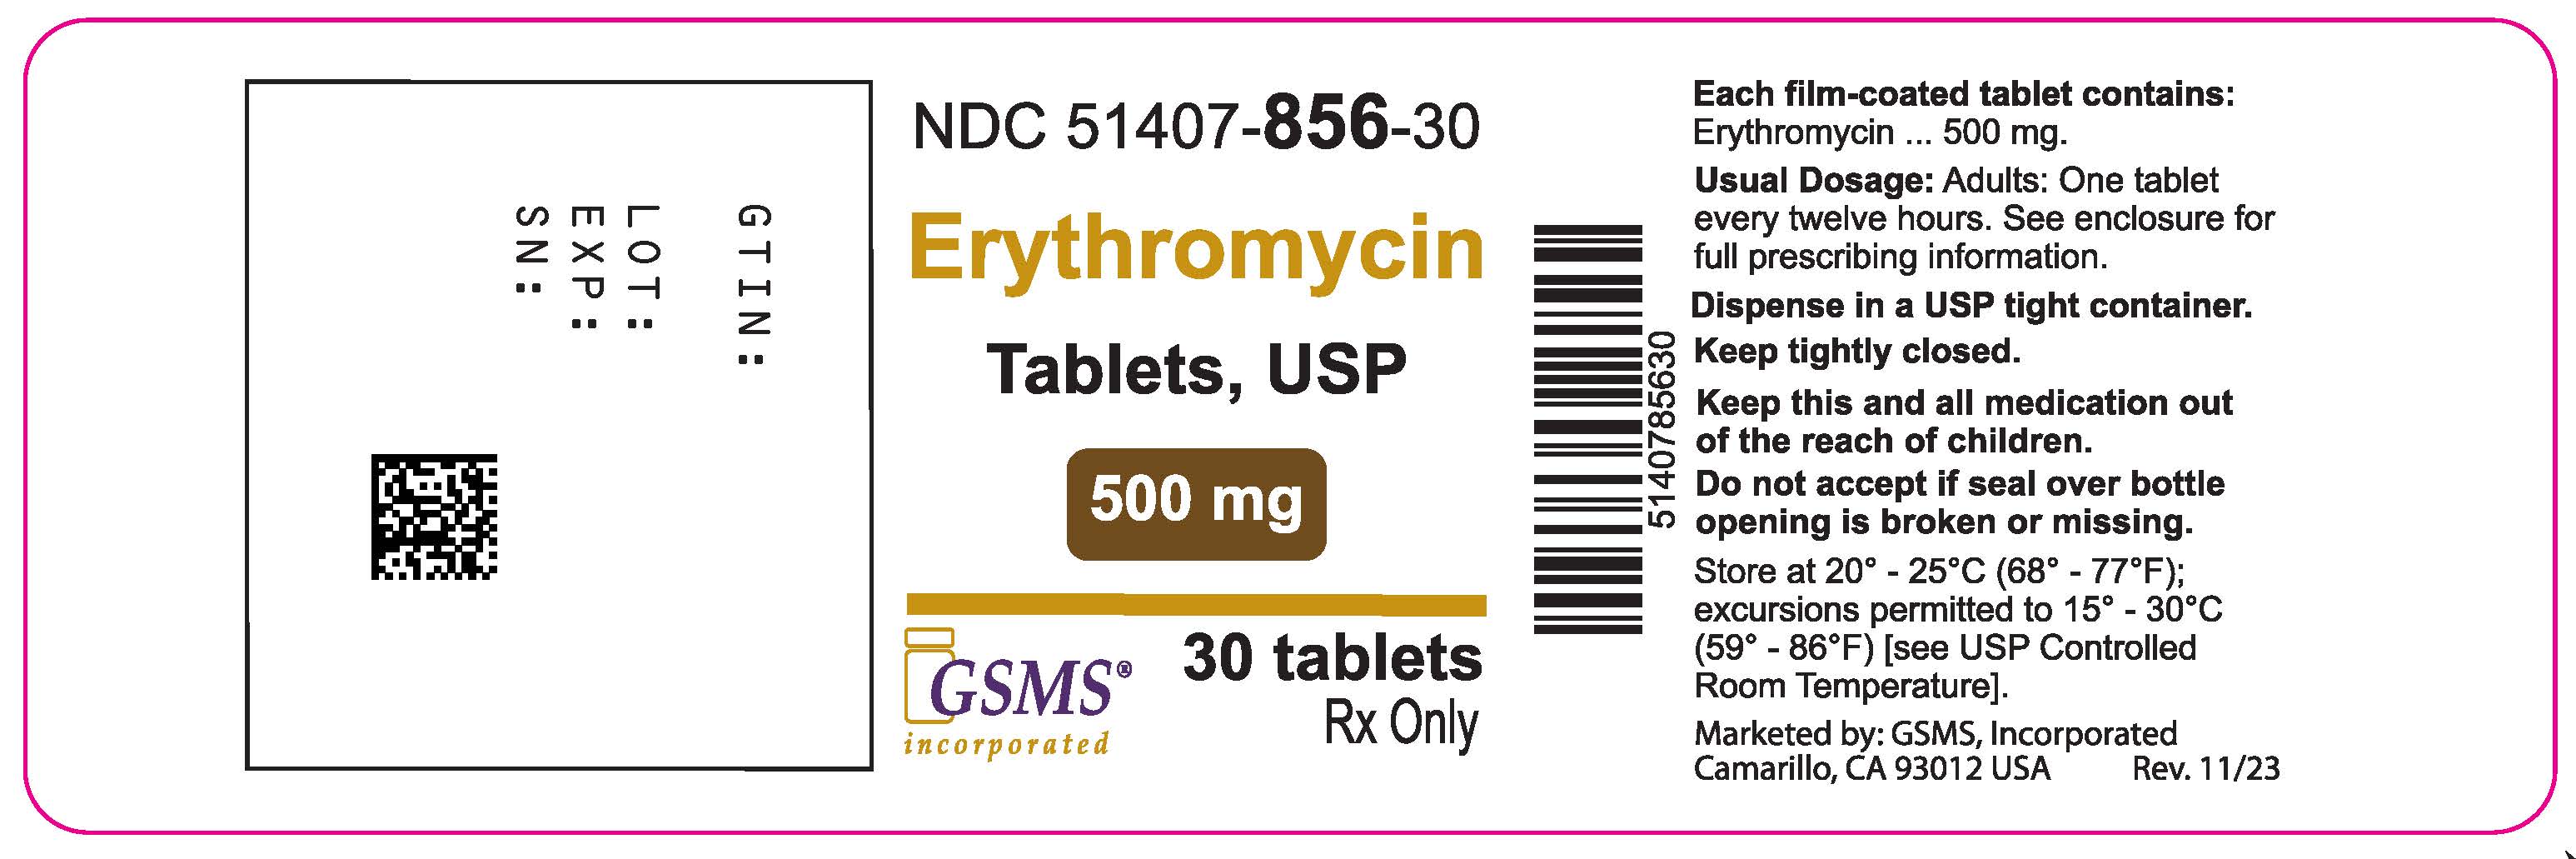 51407-856-30OL - Erythromycin Tablets - Rev. 1123.jpg